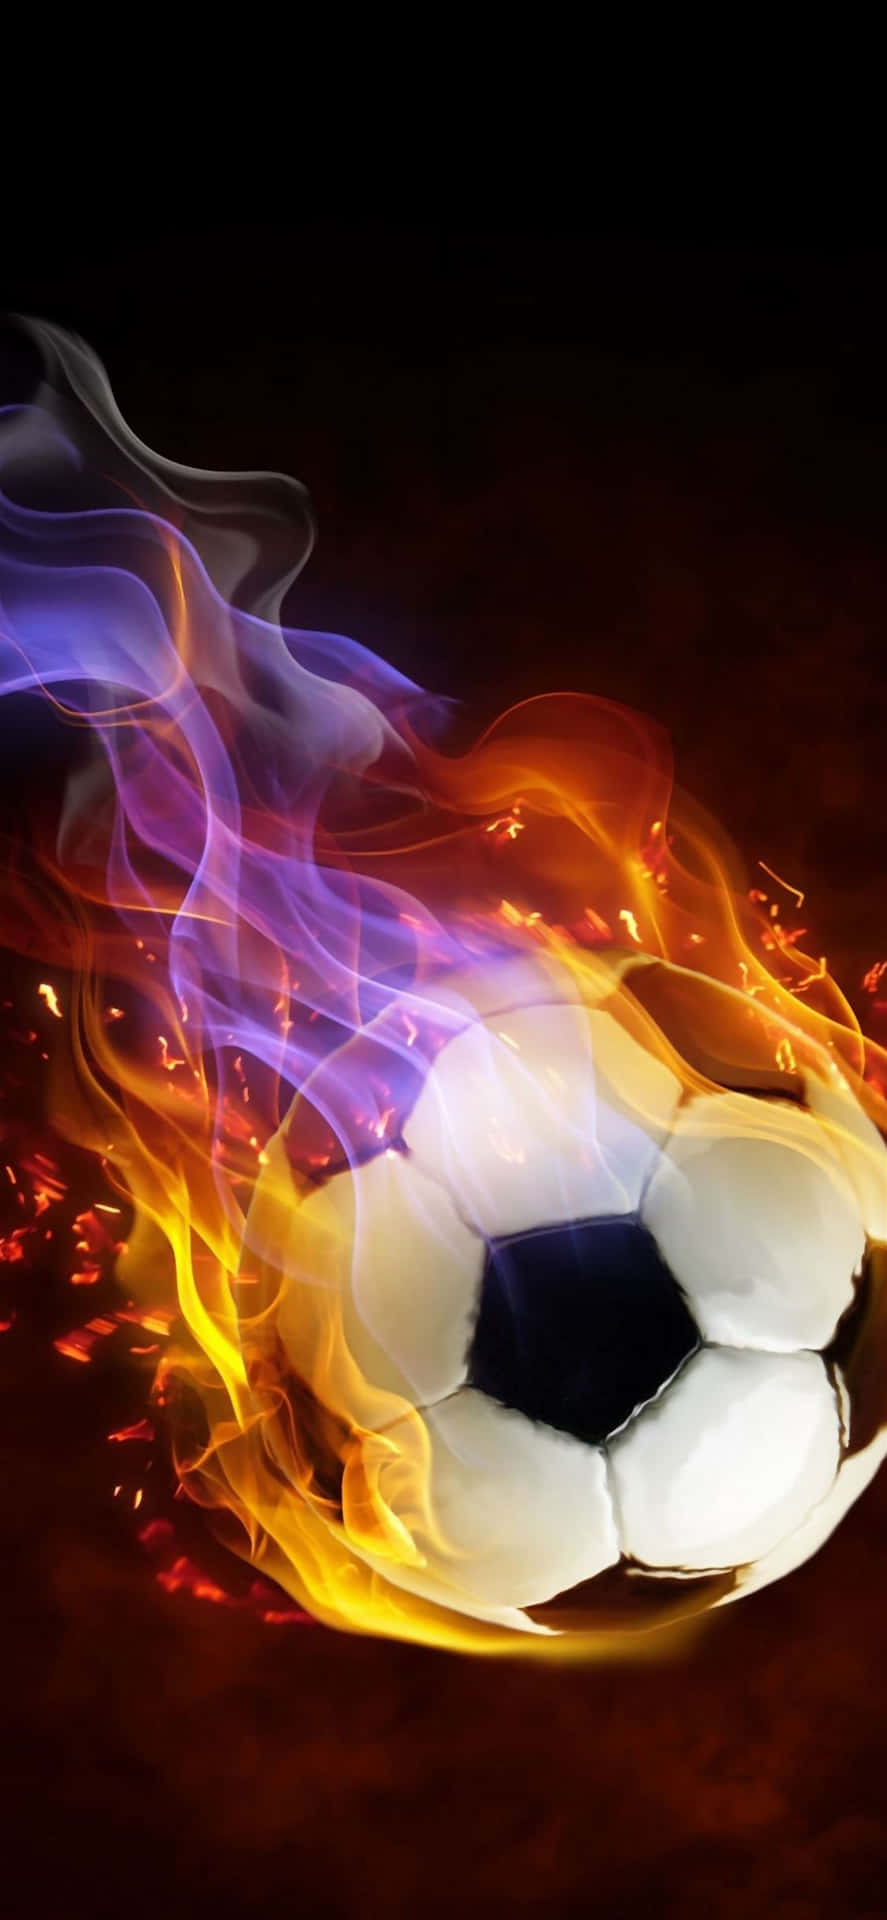 Flaming Soccer Ball Artwork Wallpaper